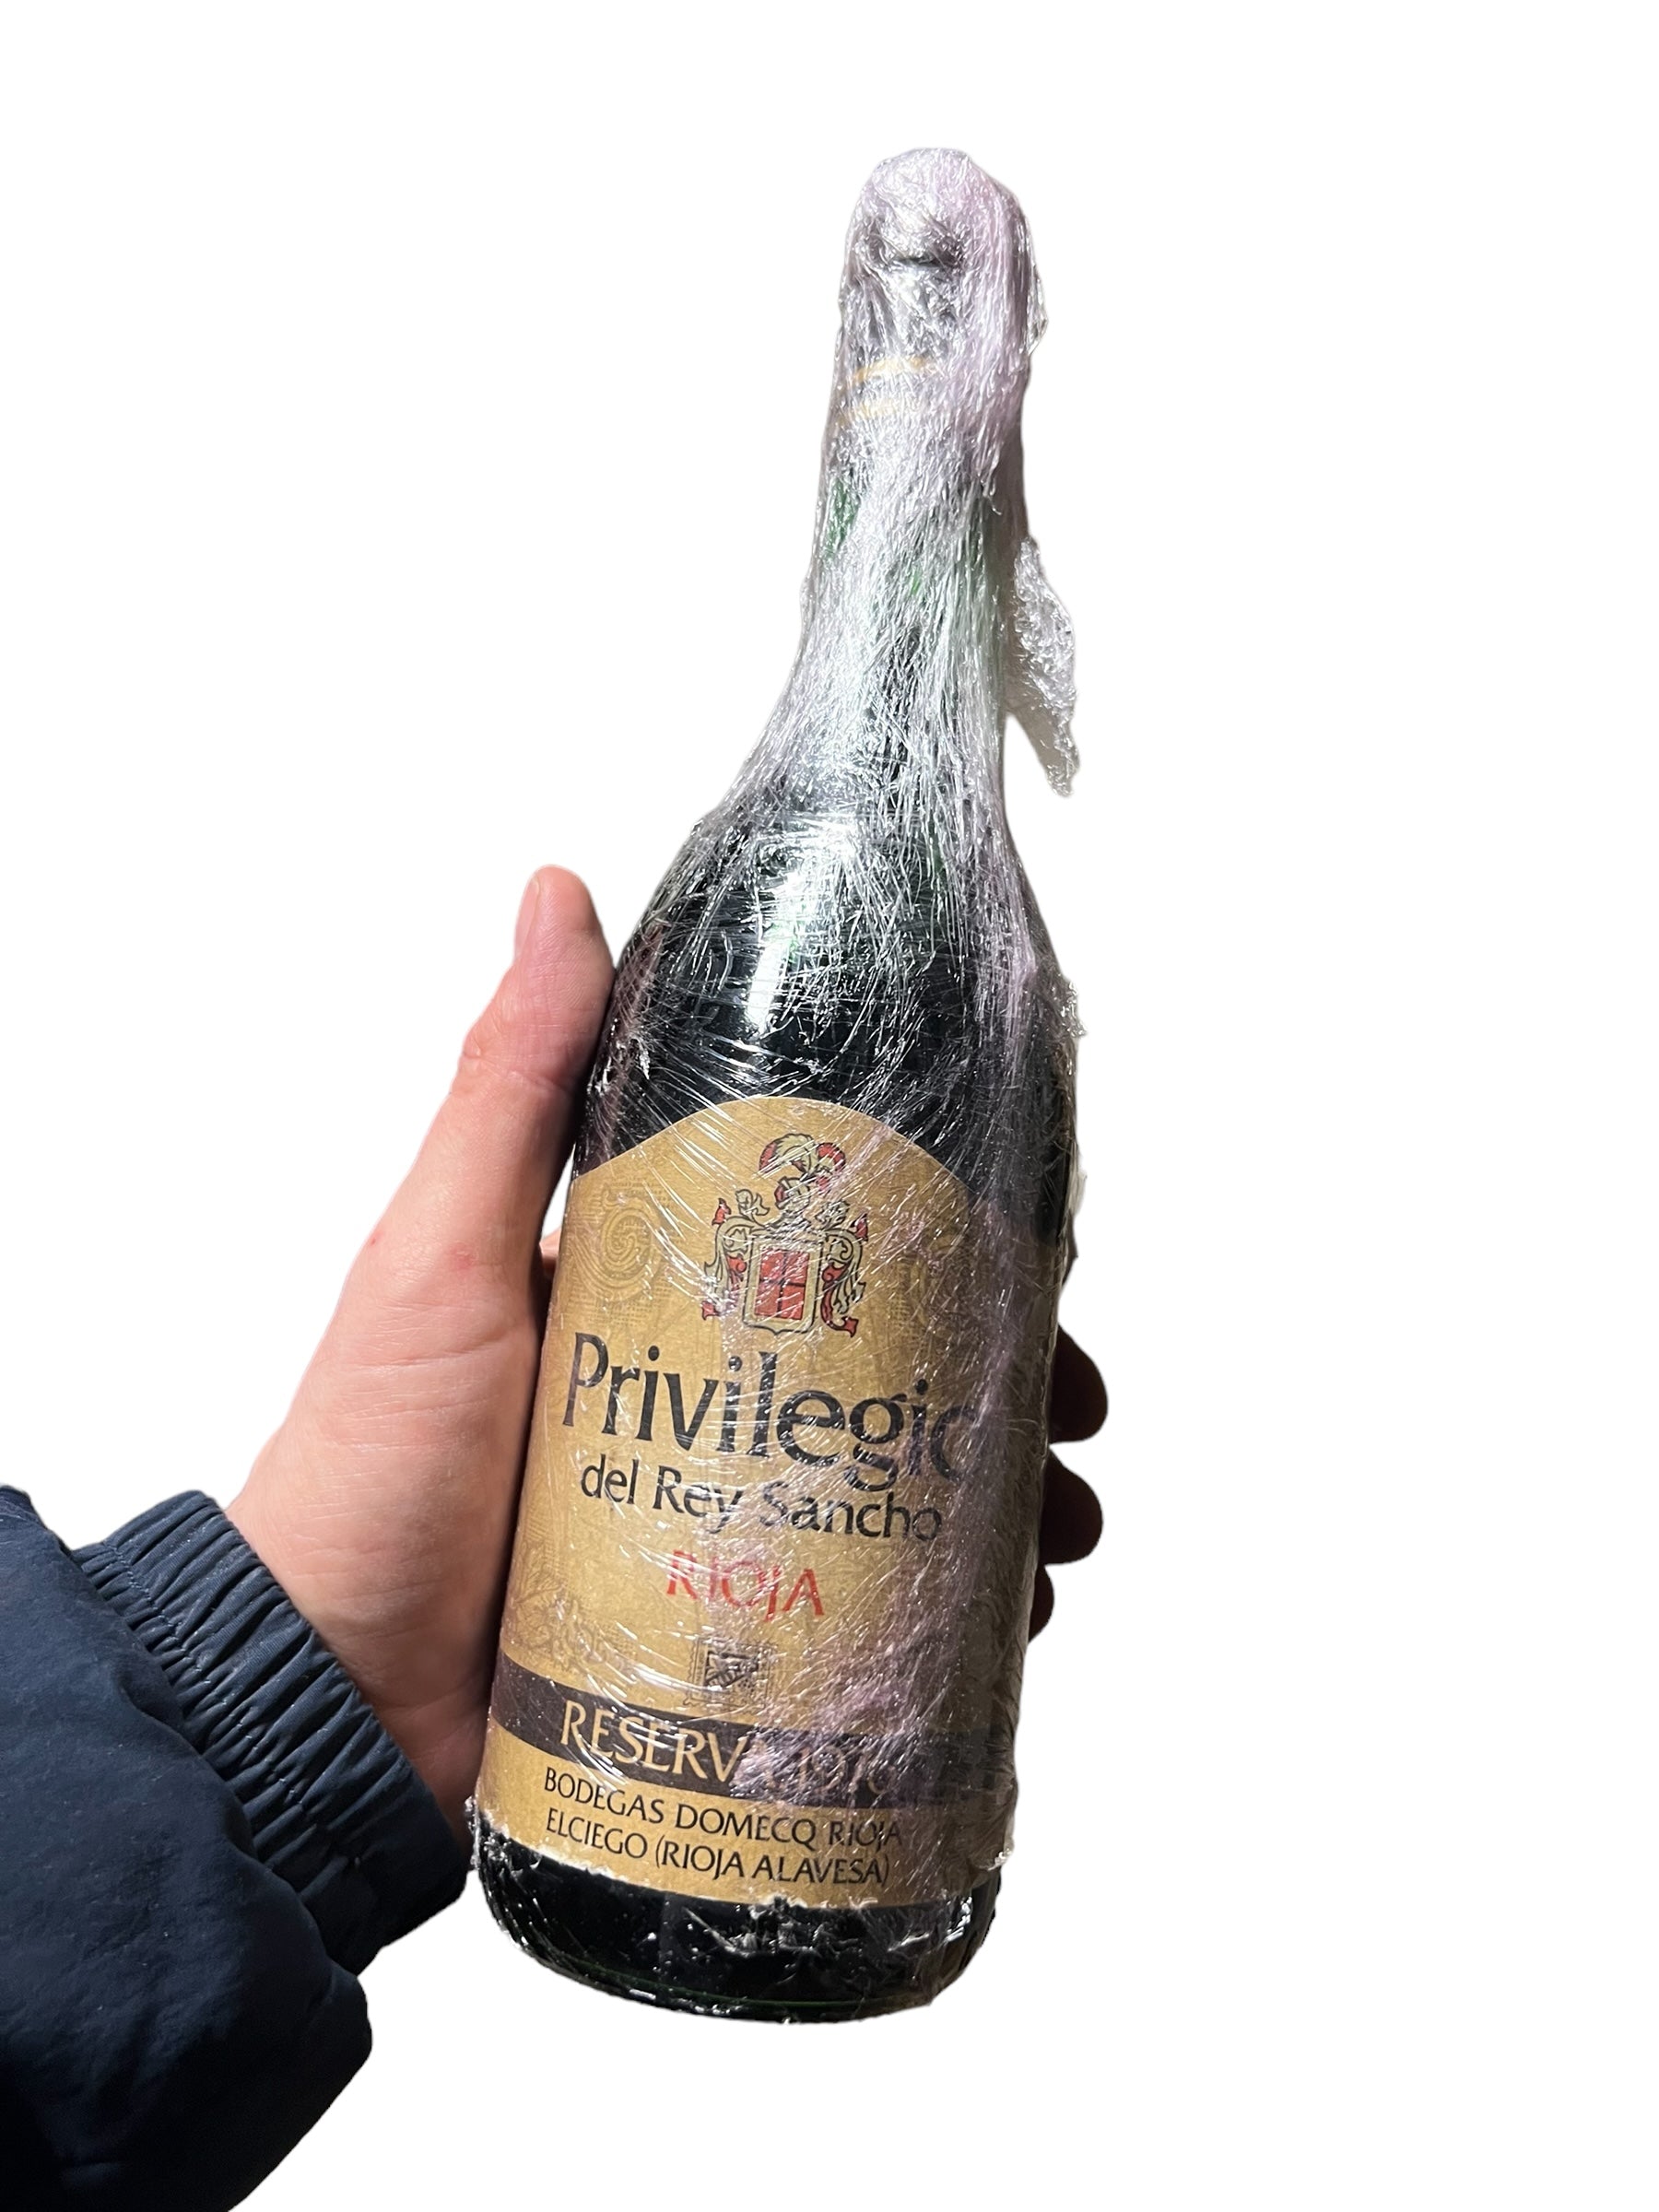 Se Rioja Privilegio Del Rey Sancho 1976 hos Bottleswithhistory.dk